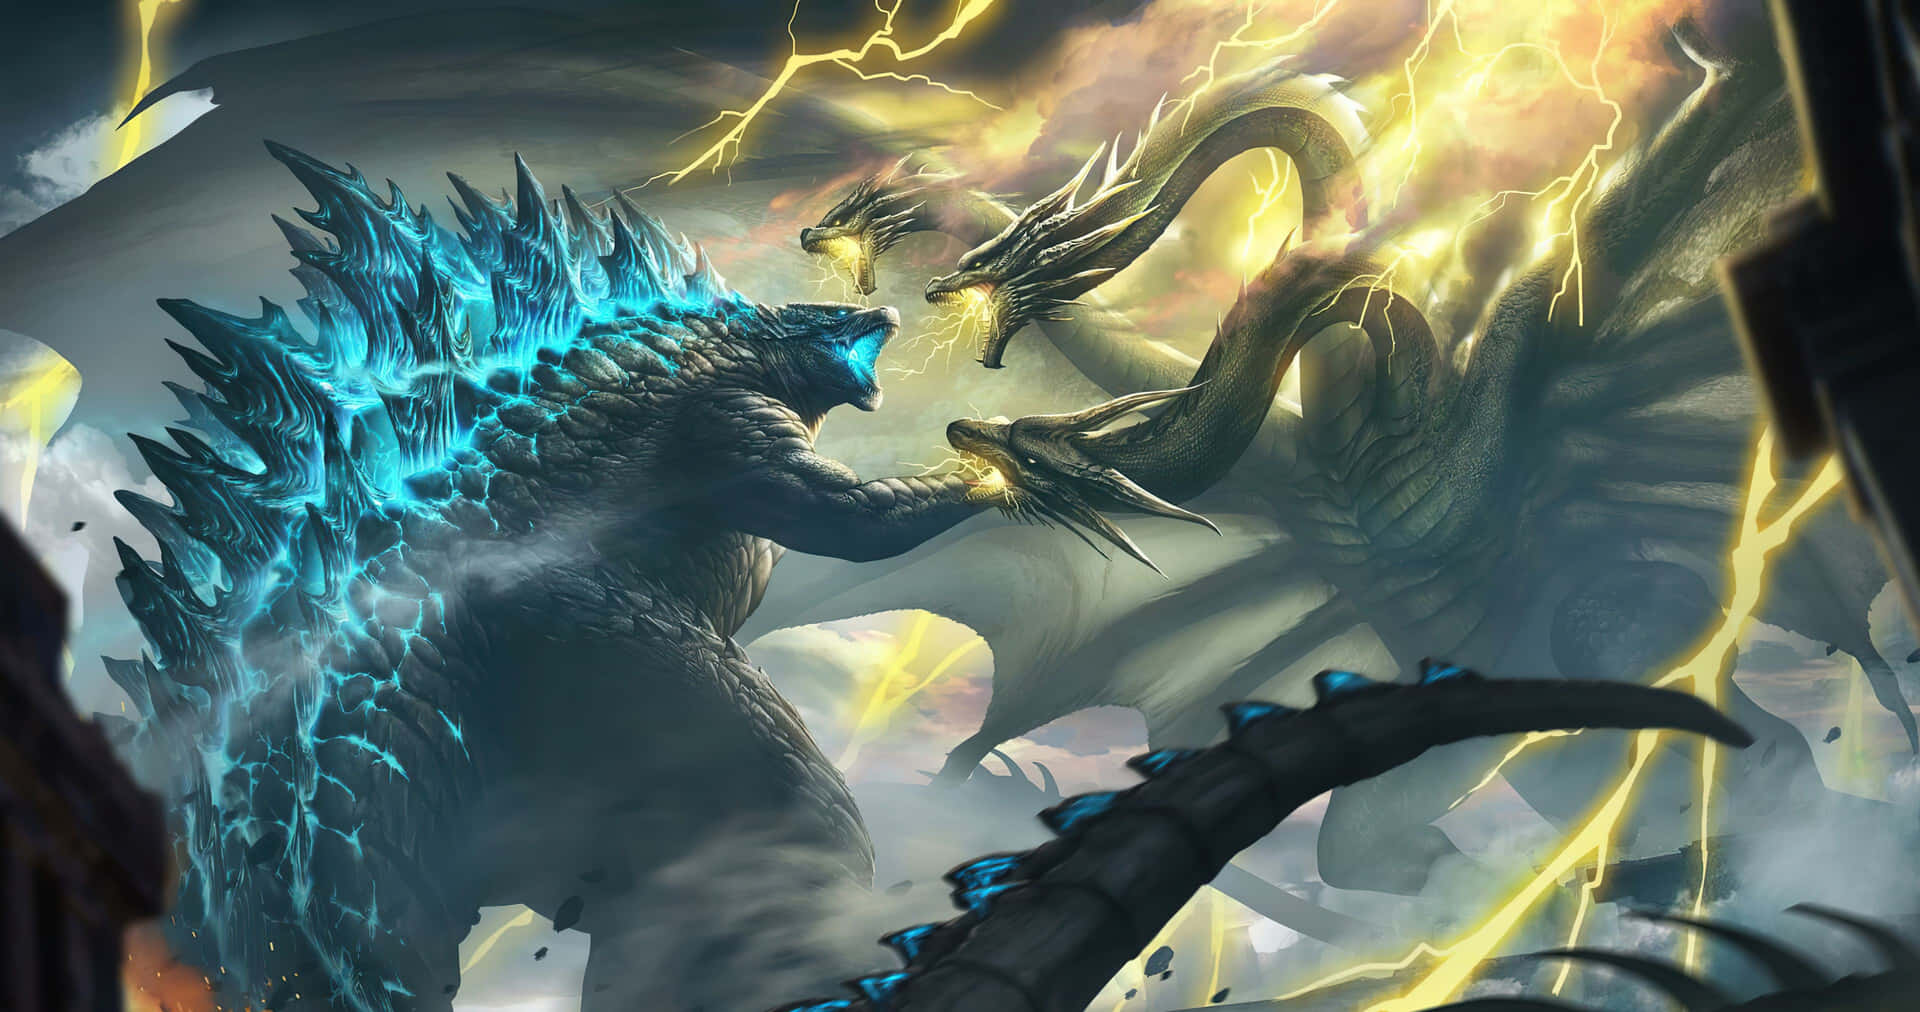 Monstrous battle between King Ghidorah and Godzilla in a cityscape Wallpaper